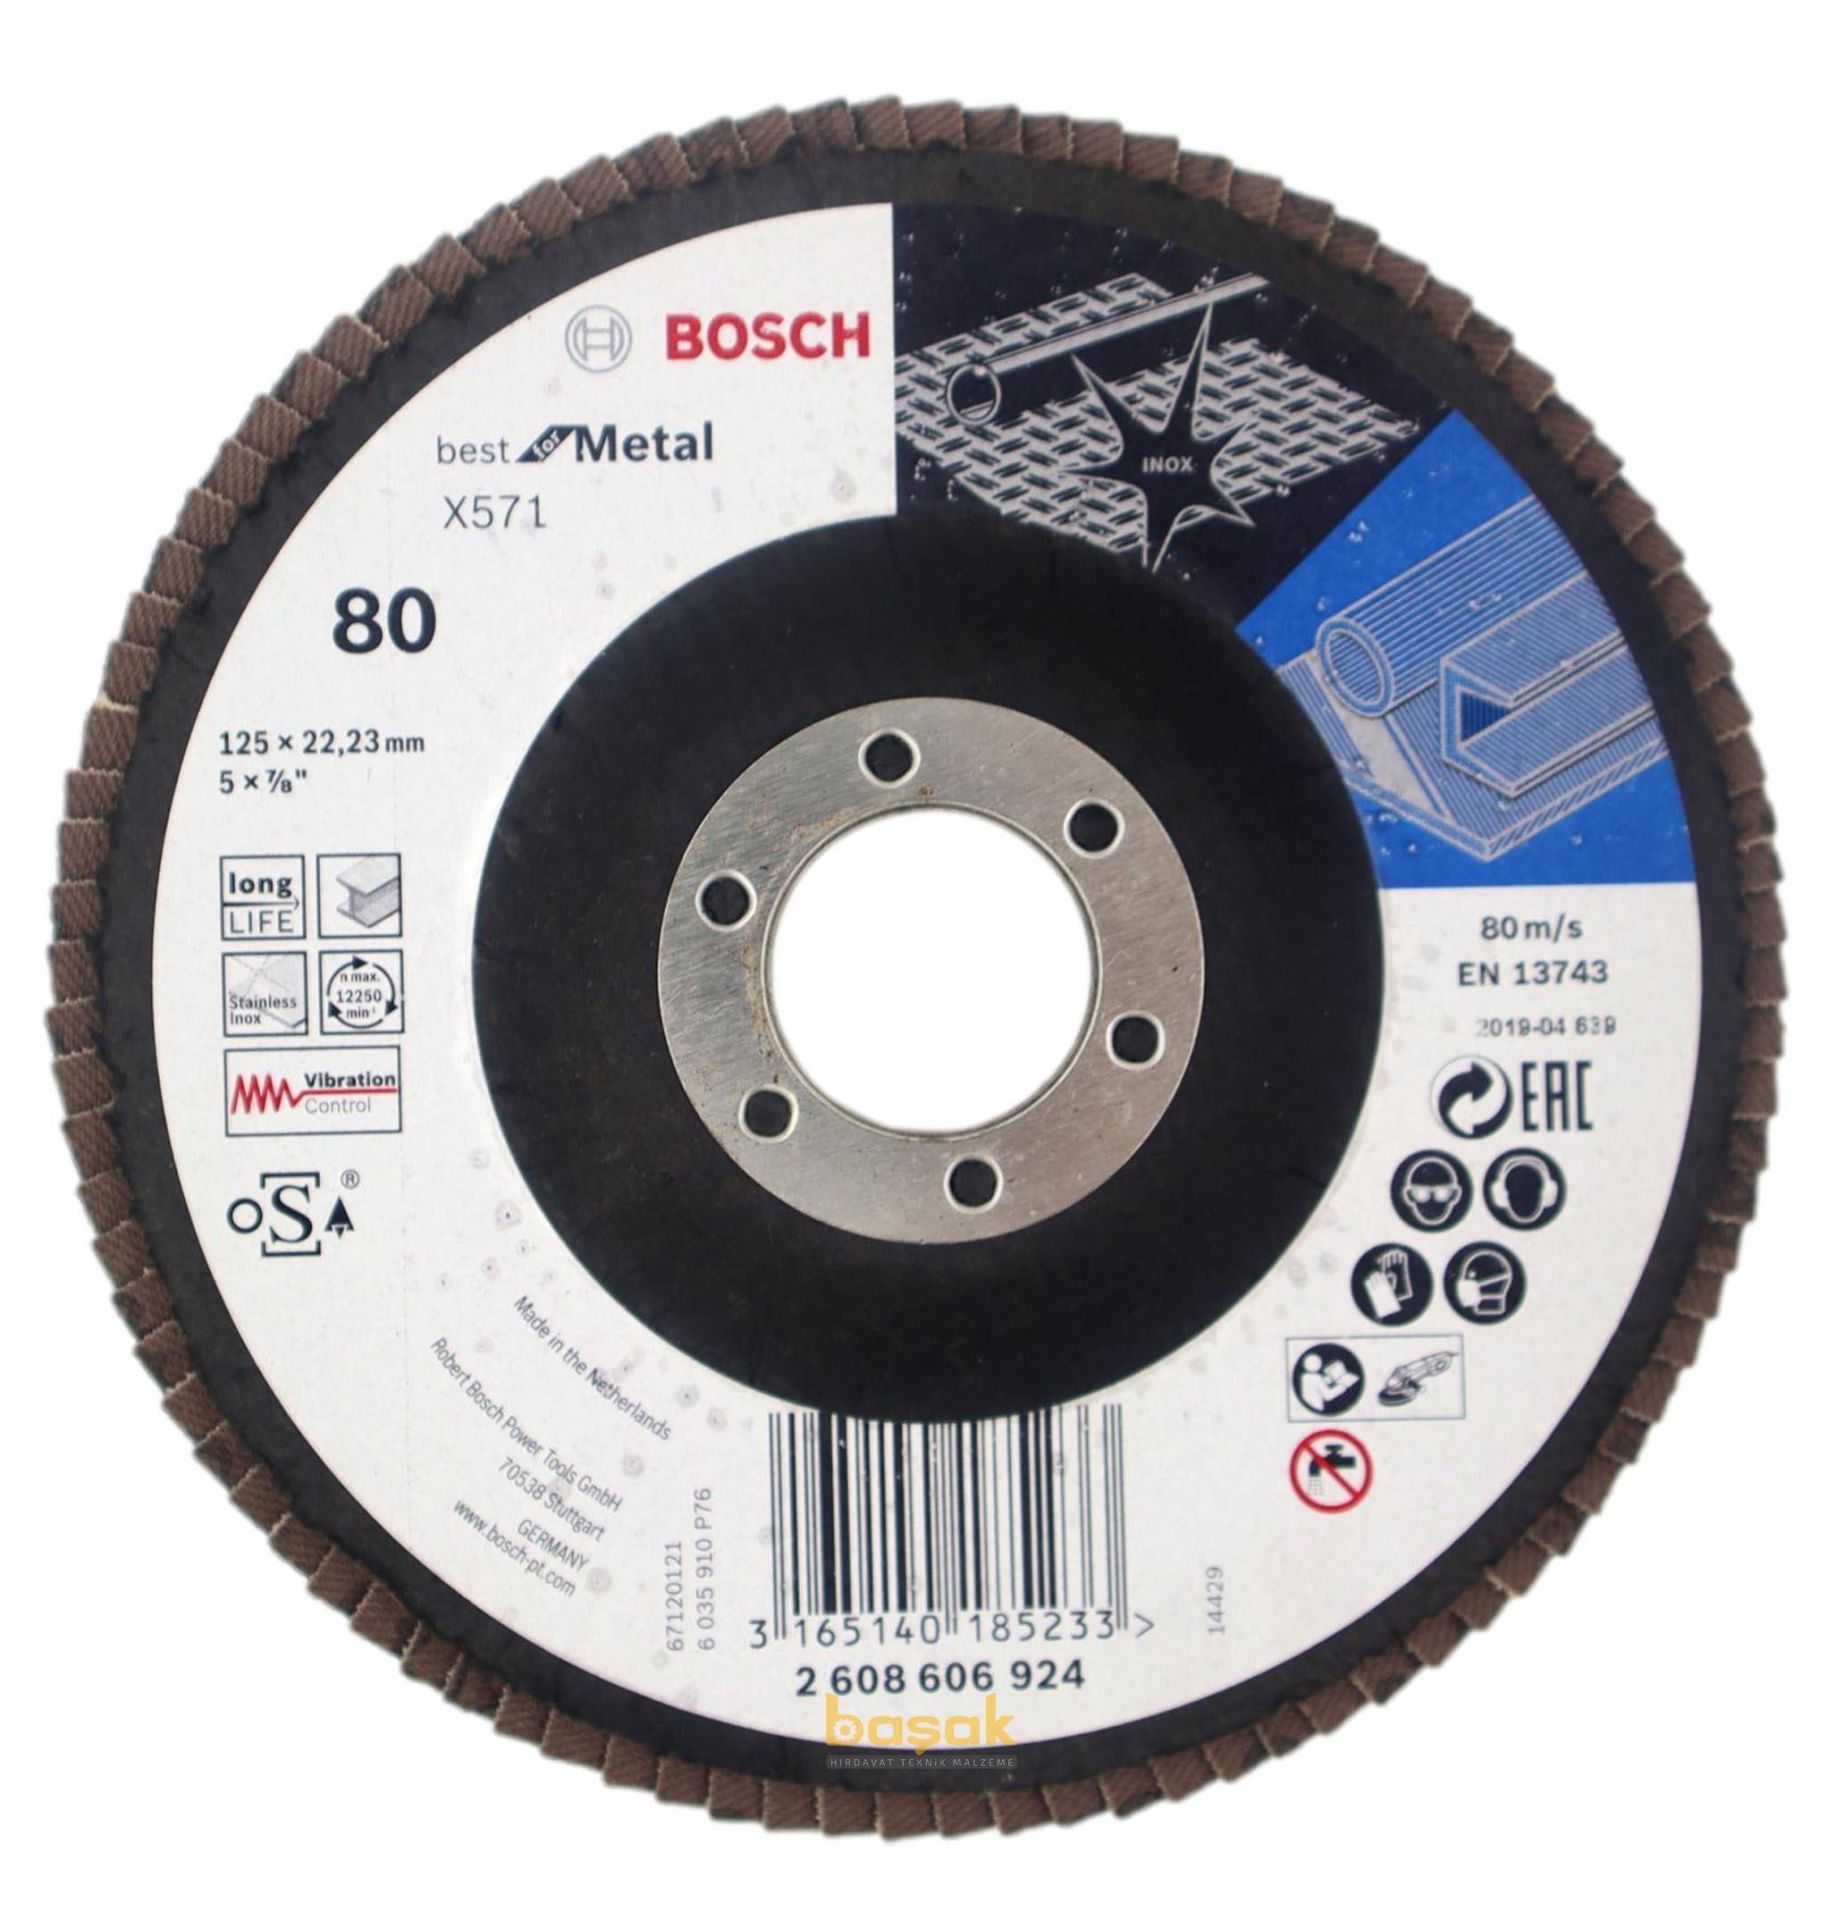 Bosch 125 mm 80 Kum X571 Best İnox-Metal Flap Disk 2608606924